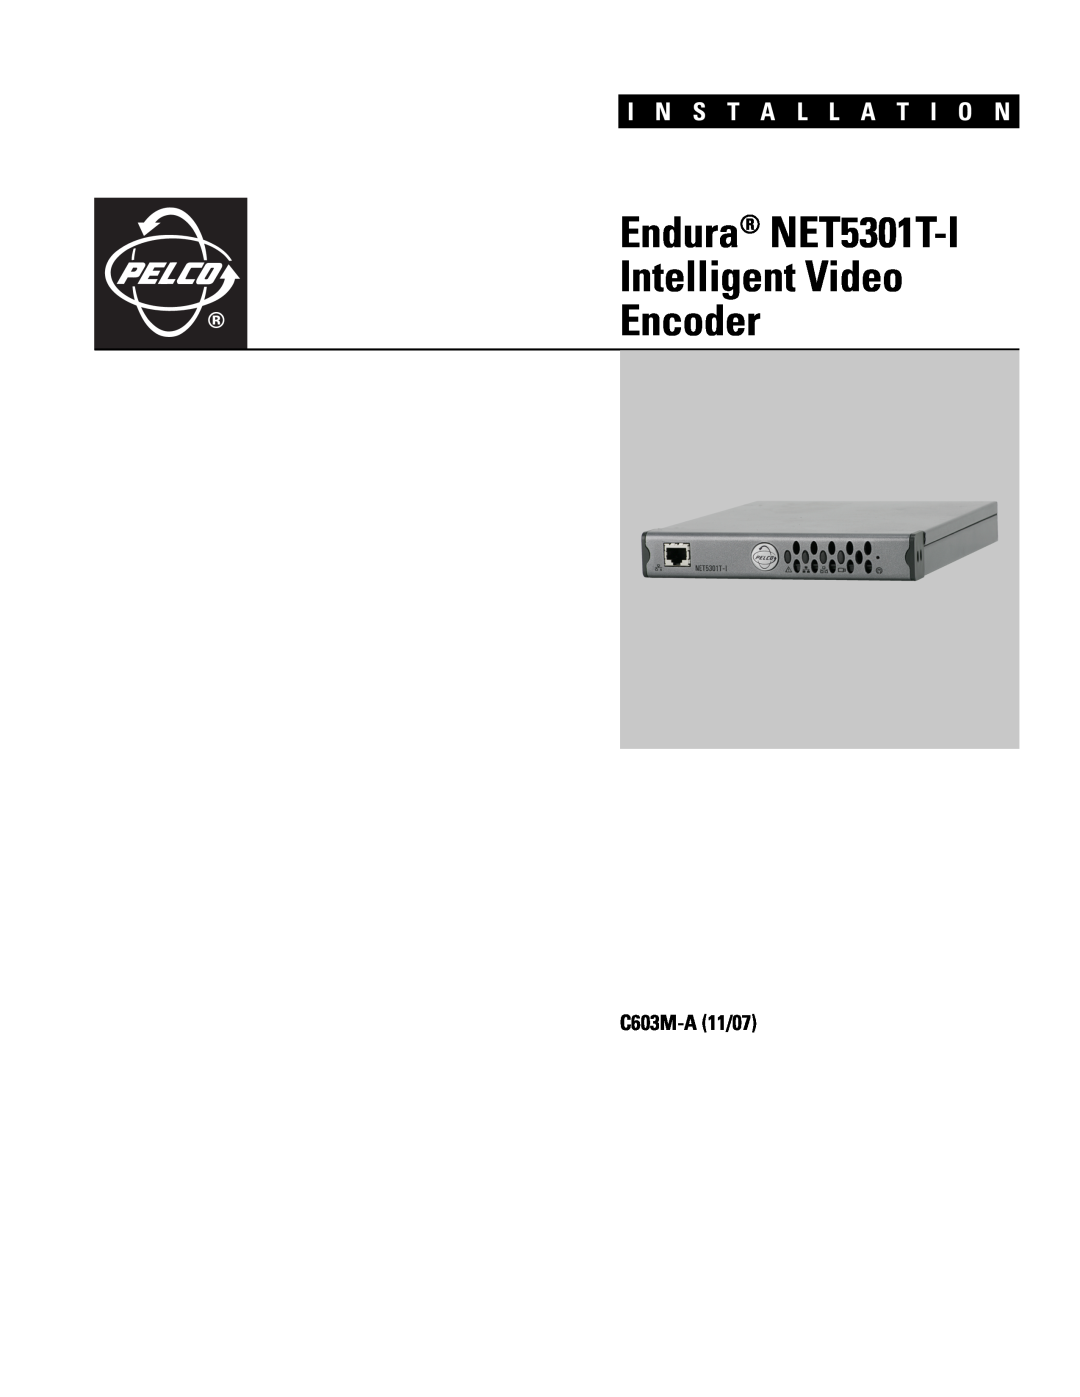 Pelco C603M-A (11/07) manual C603M-A 11/07, Endura NET5301T-I Intelligent Video Encoder, I N S T A L L A T I O N 